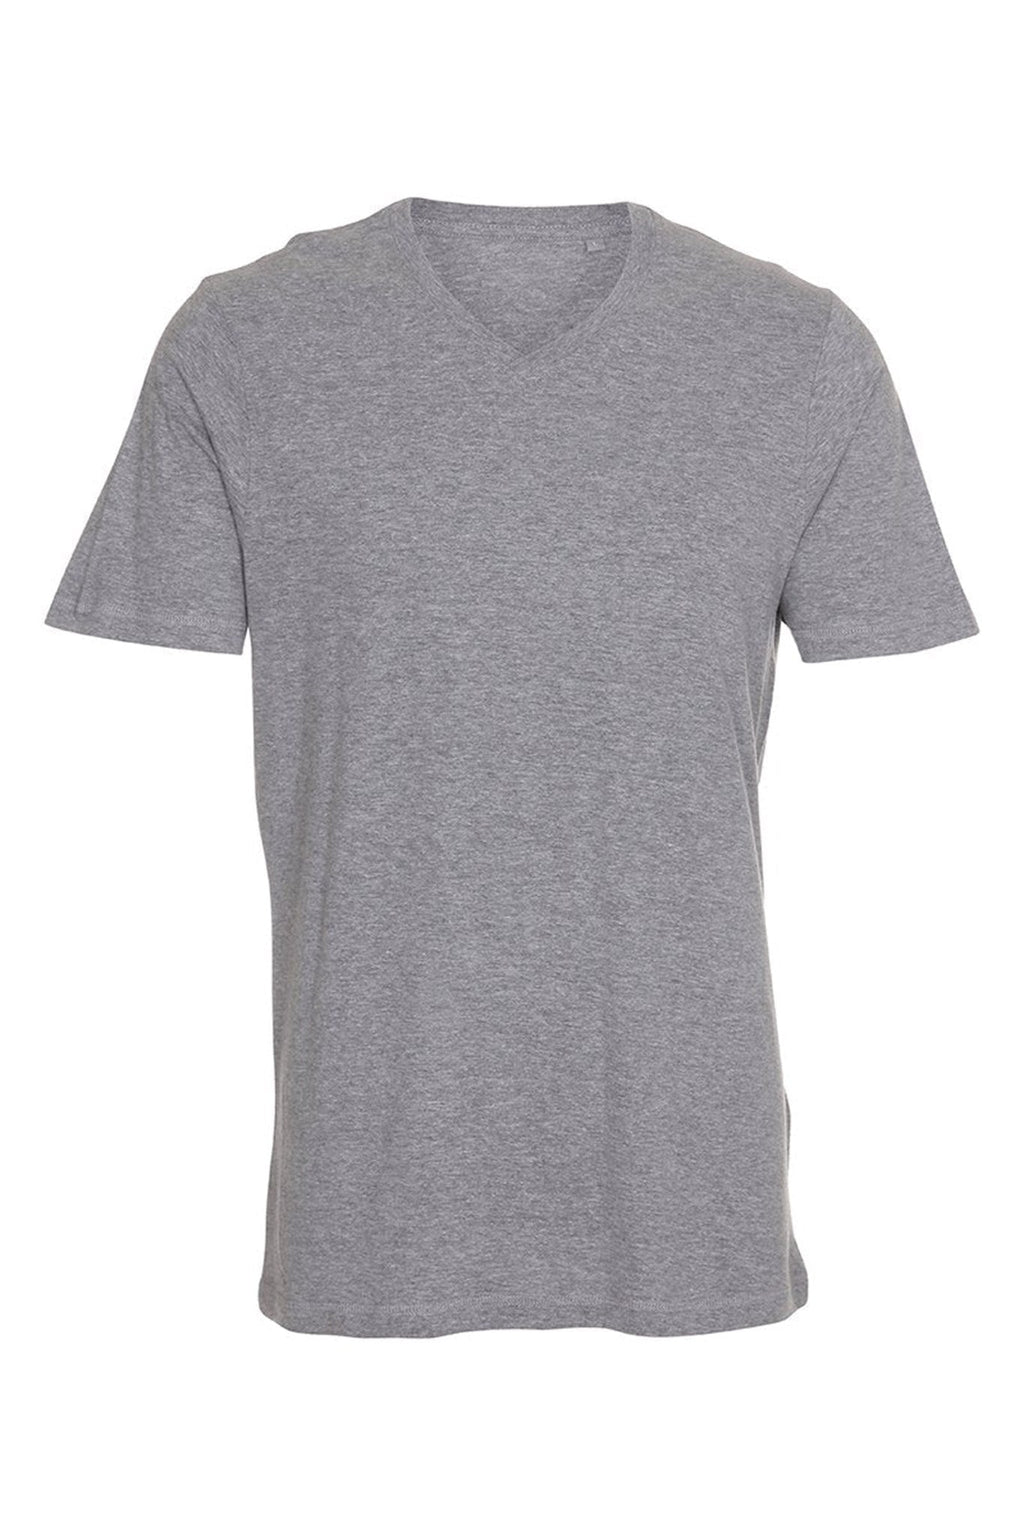 Basic Vneck T -shirt - Oxford Gray